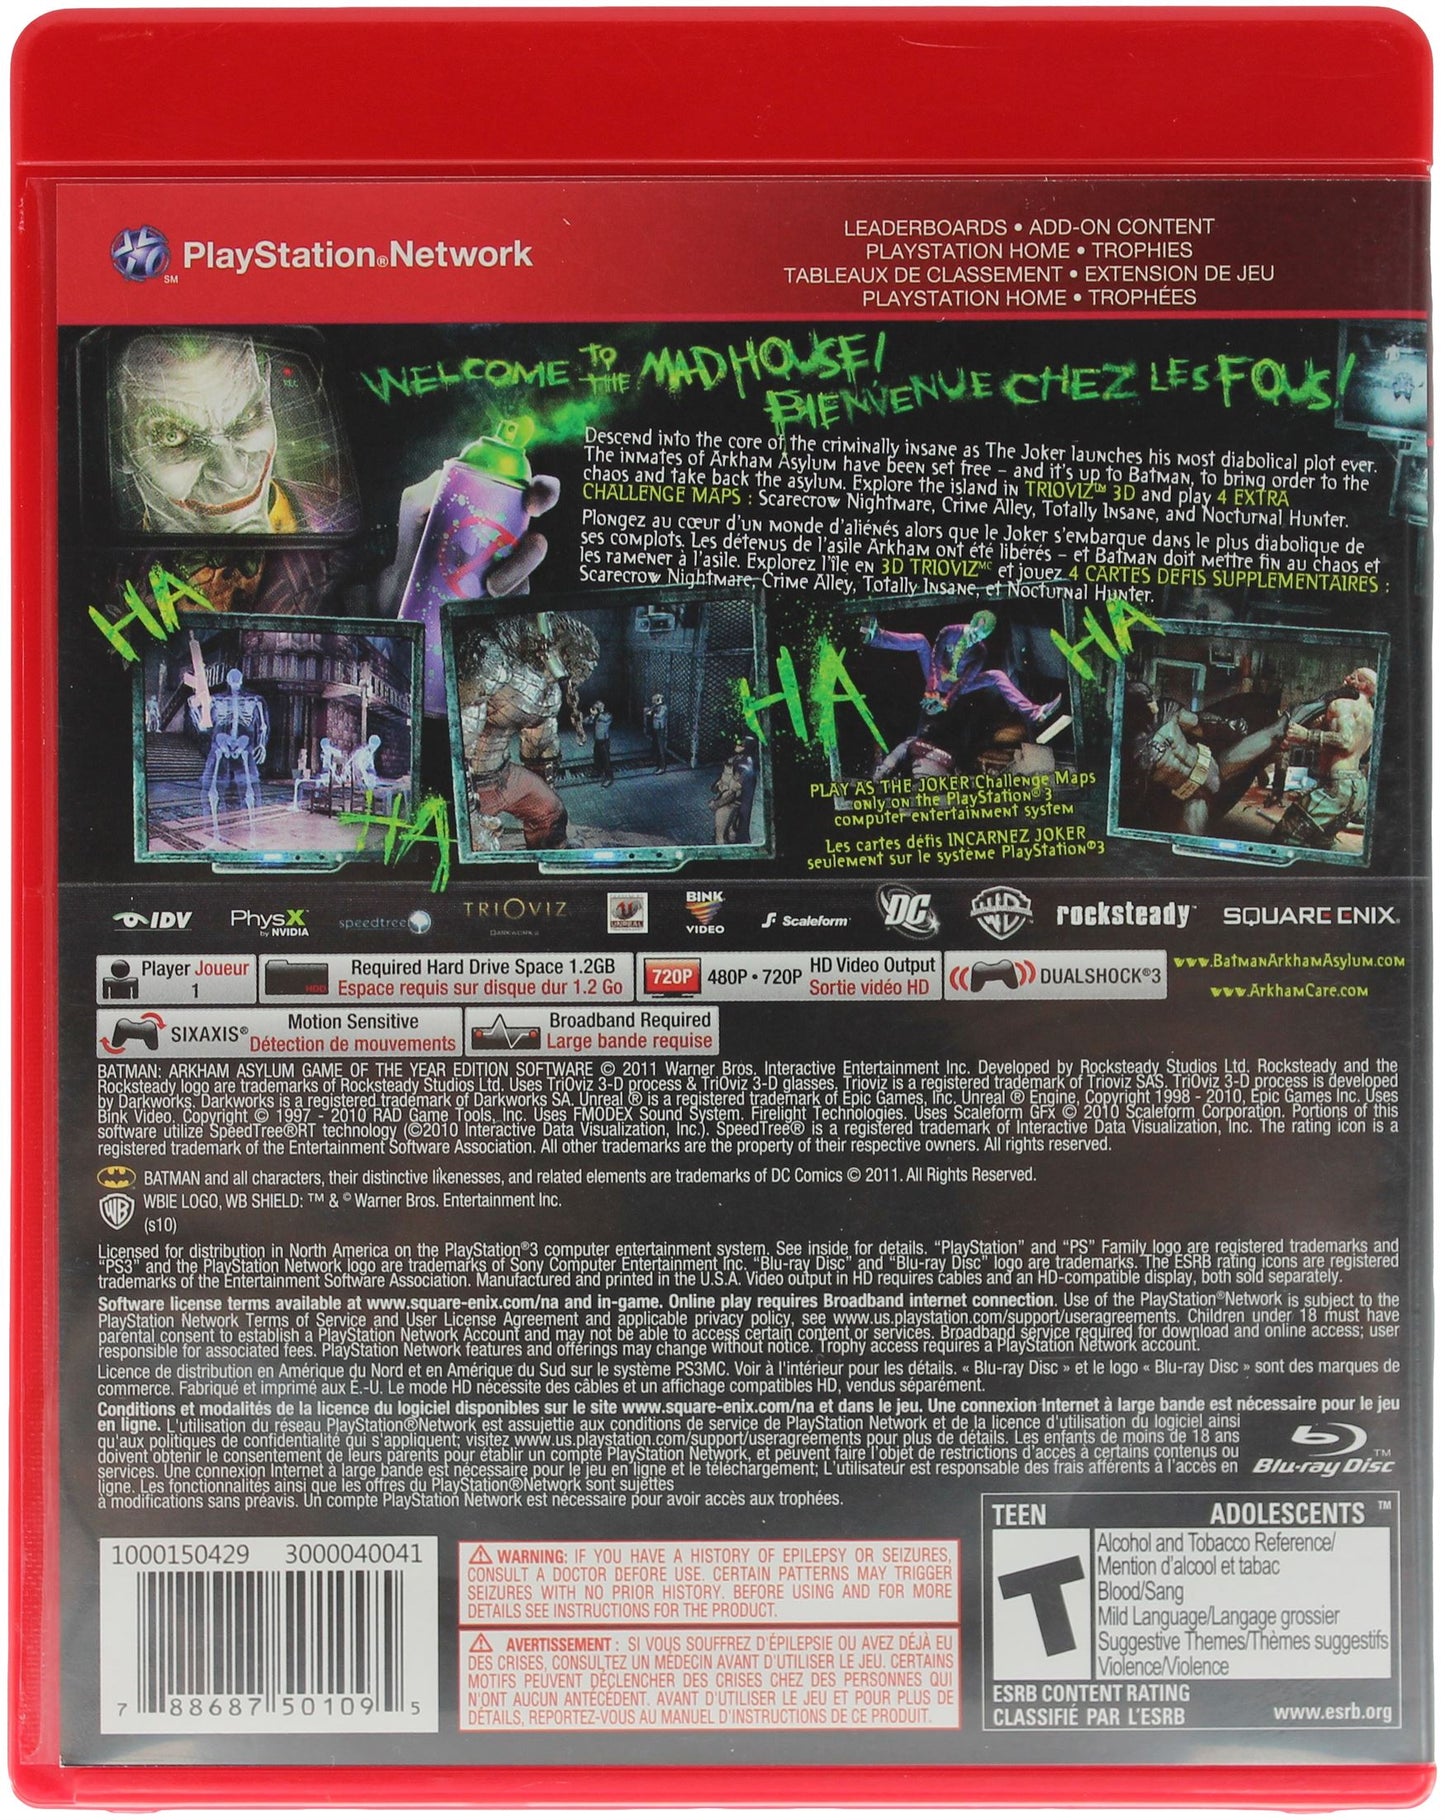 Batman: Arkham Asylum [Game Of The Year Edition] [Greatest Hits] (PS3)